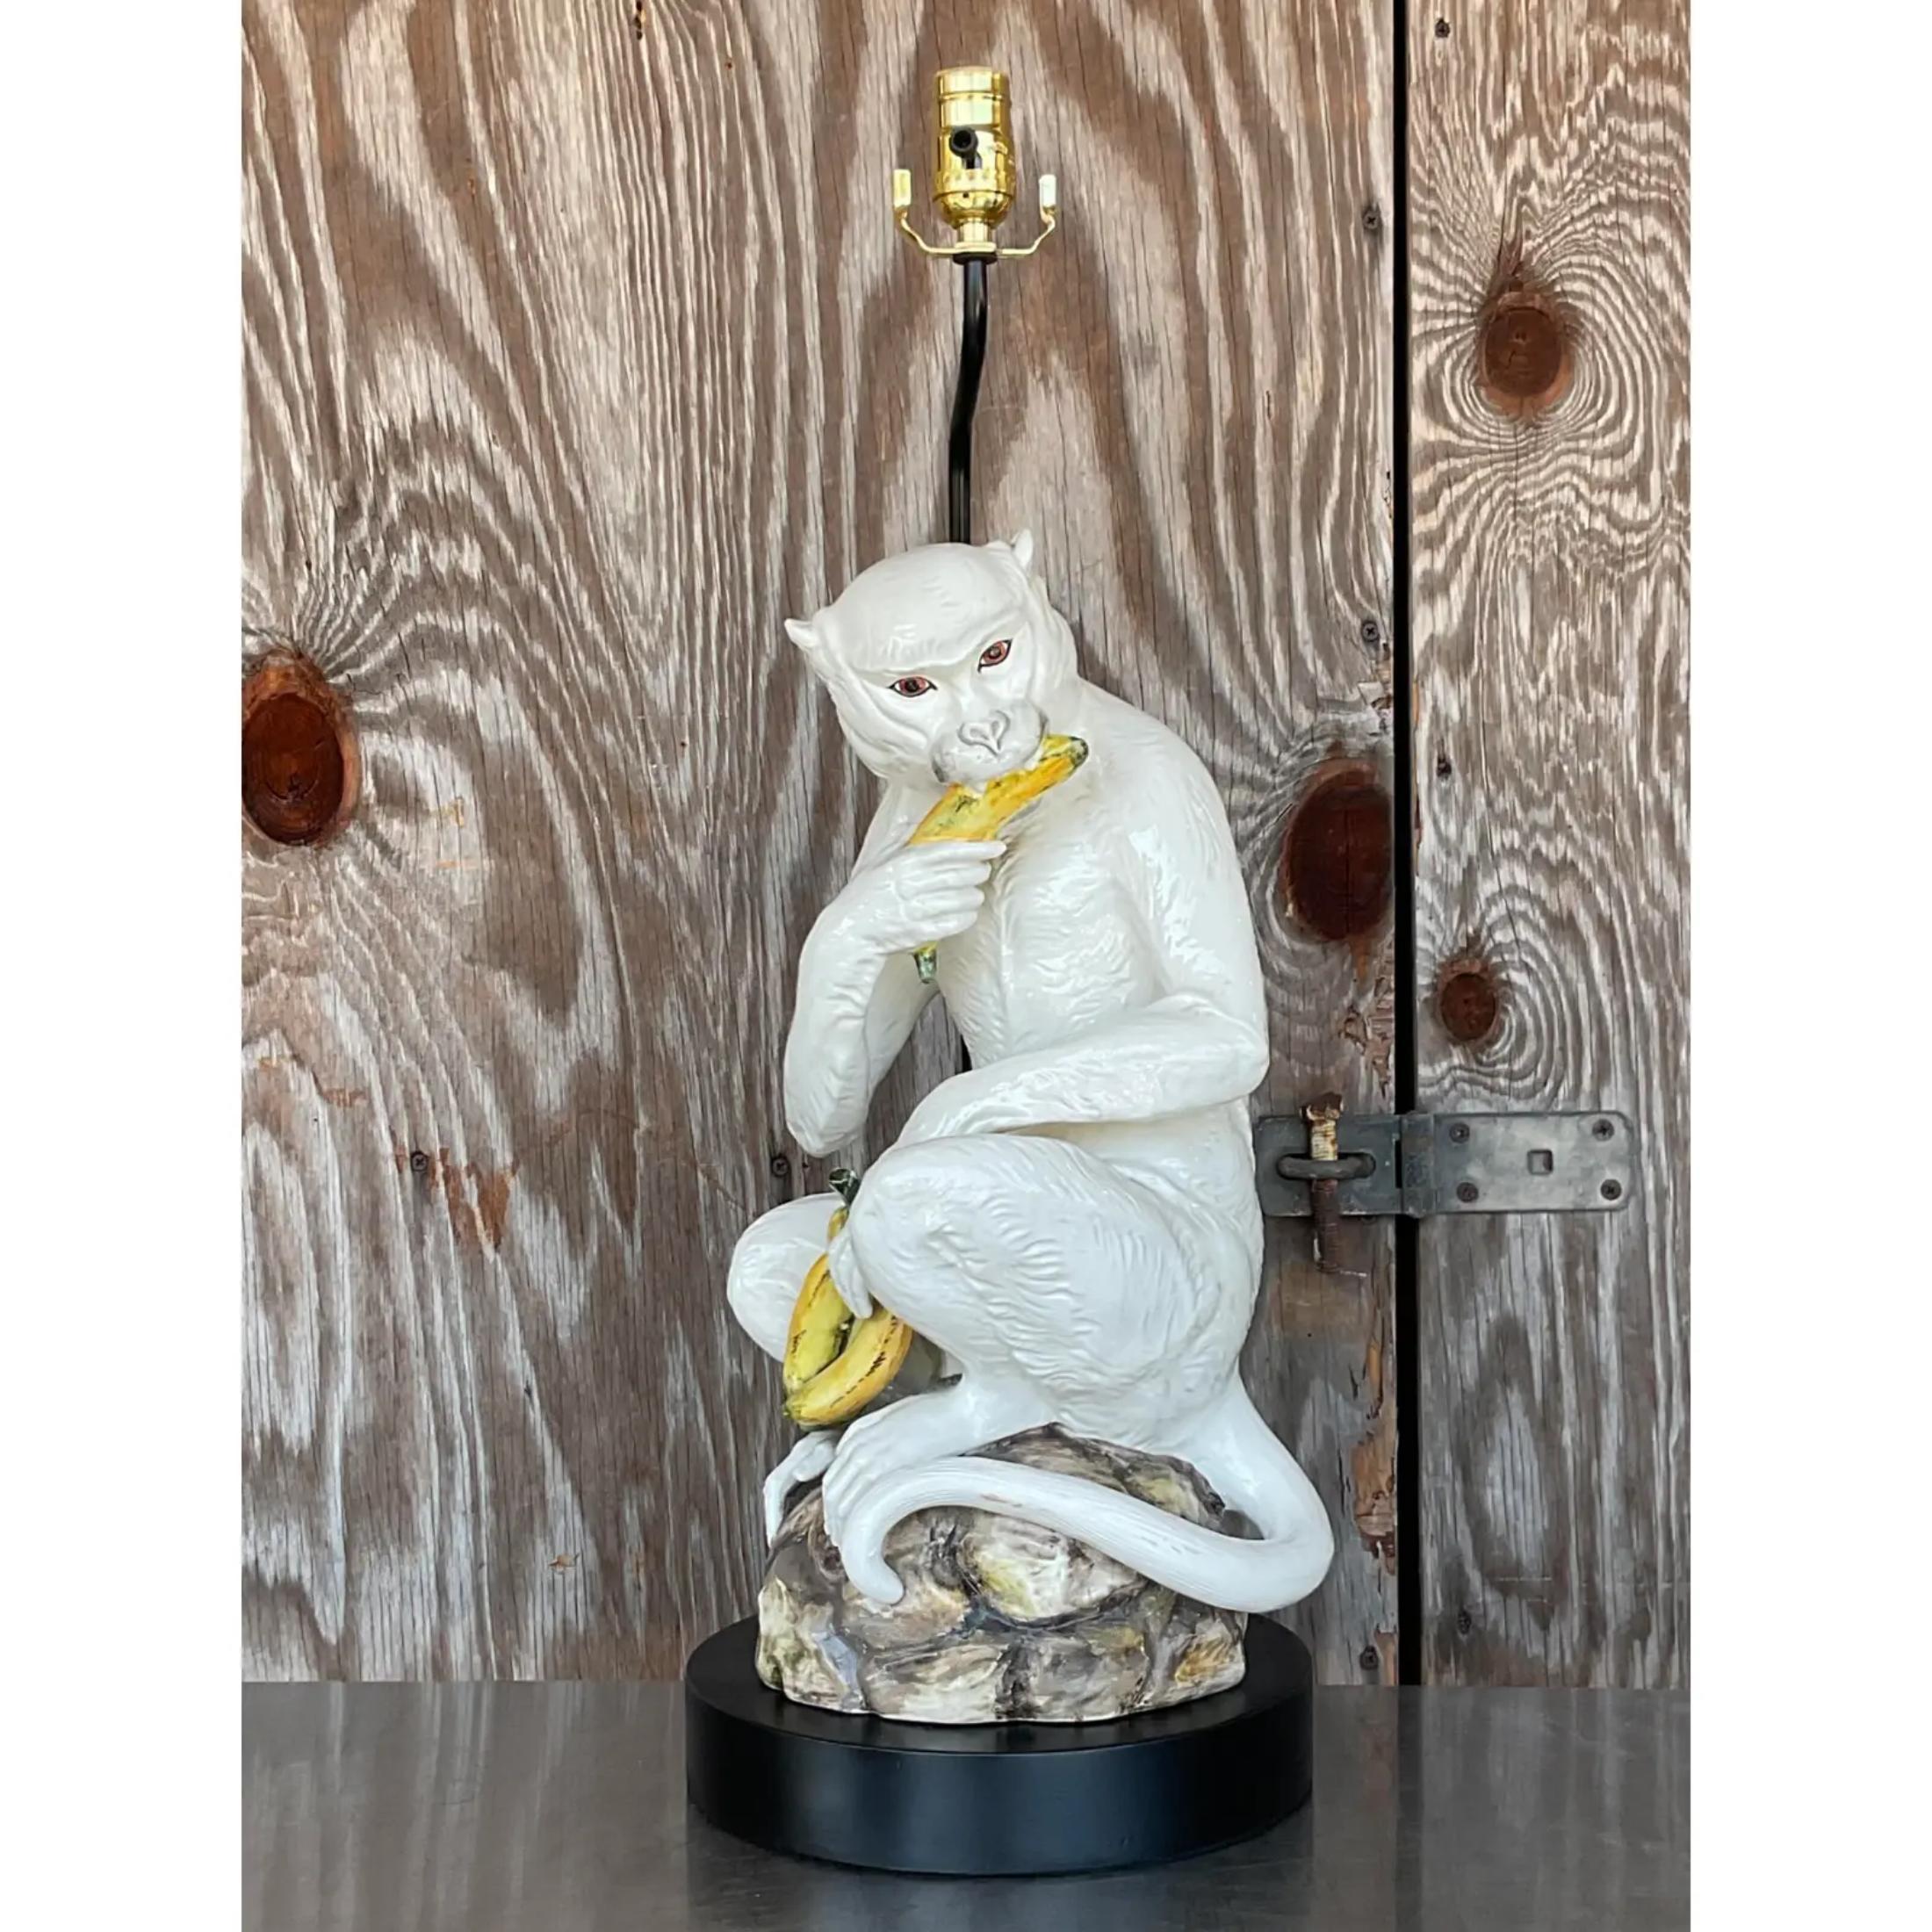 20th Century Vintage Coastal Italian Glazed Ceramic Monkey Lamp For Sale - Image 4 of 6Mid 20